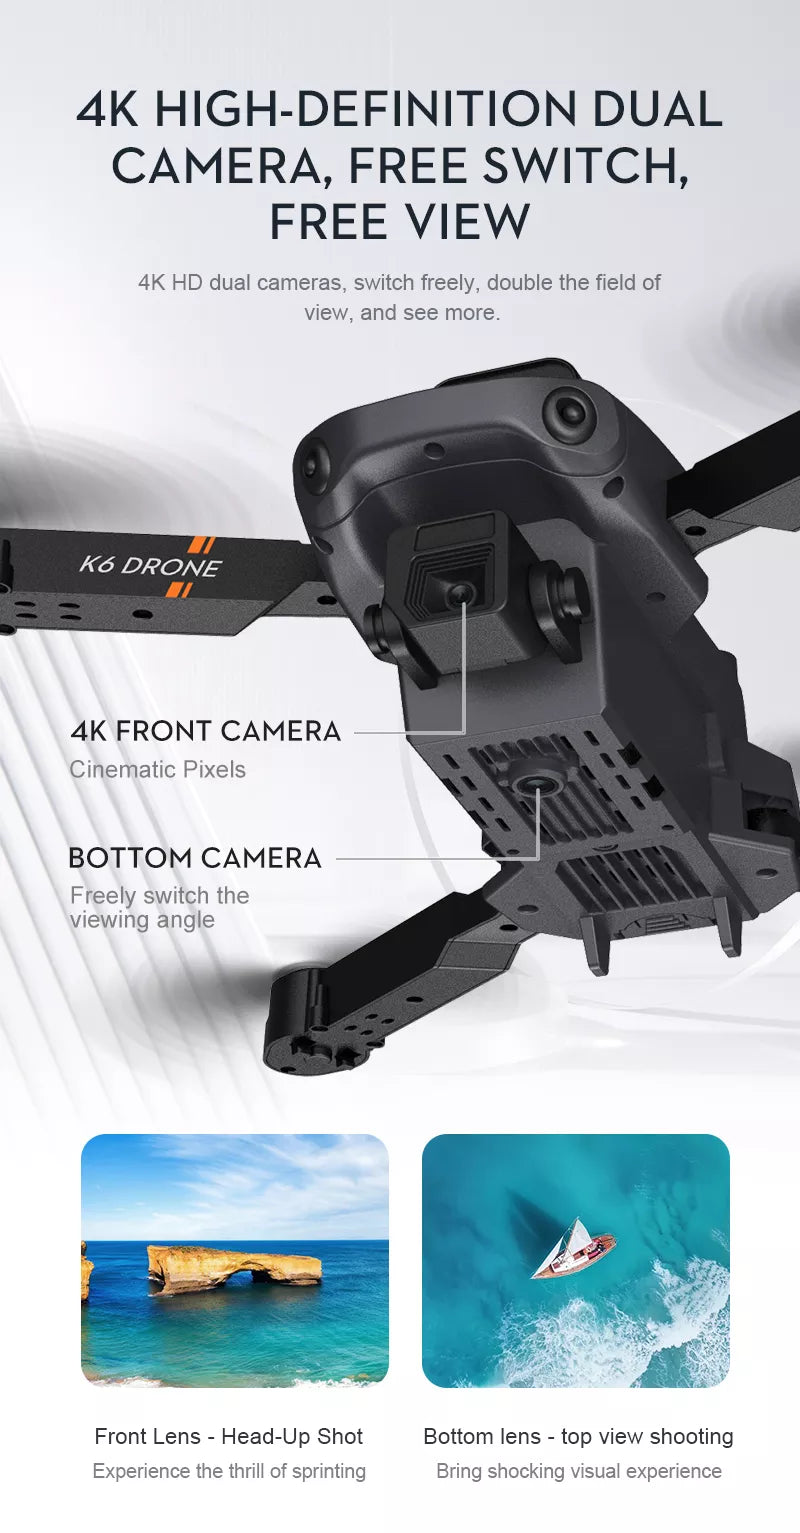 K6 Drone, 4kk high-definition dual camera, free switch, free